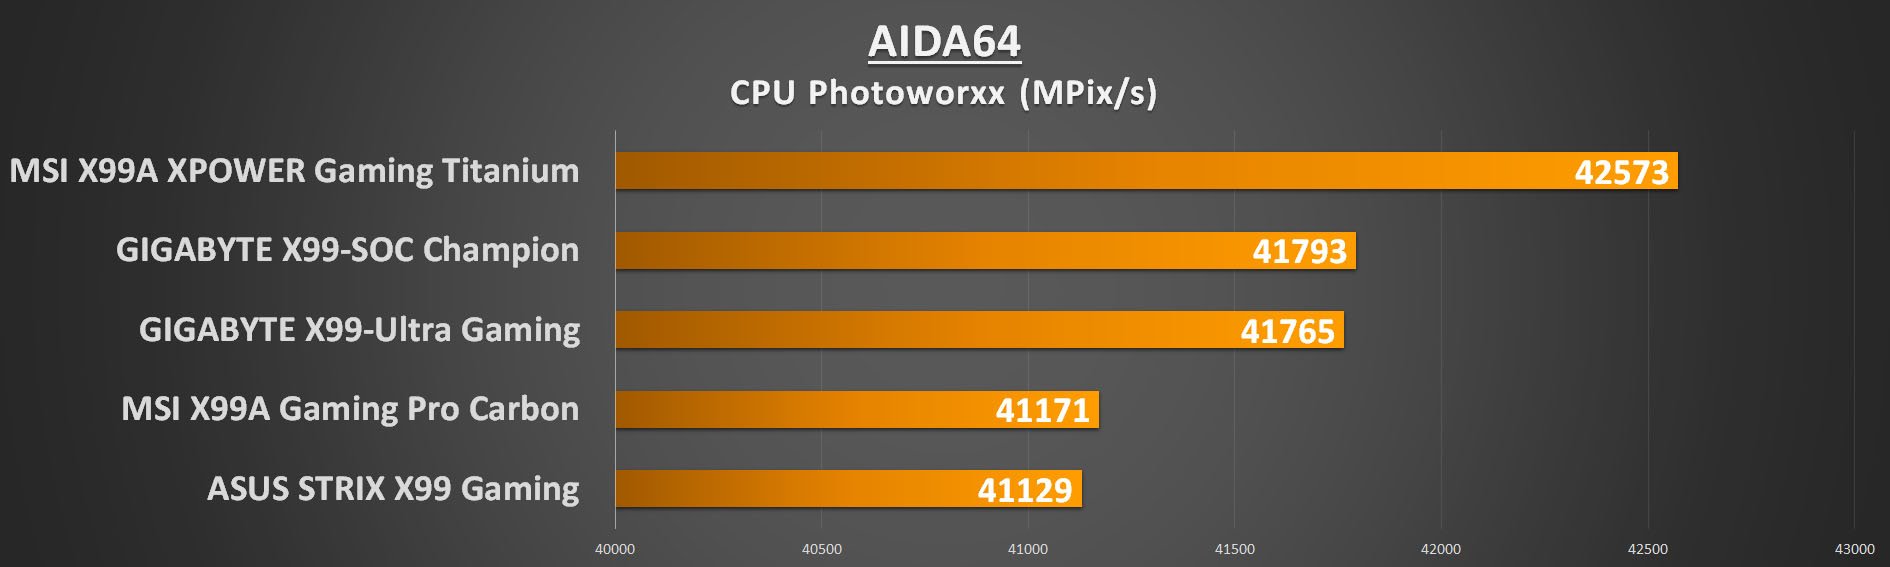 gigabyte-x99-ultra-gaming-aida-photo